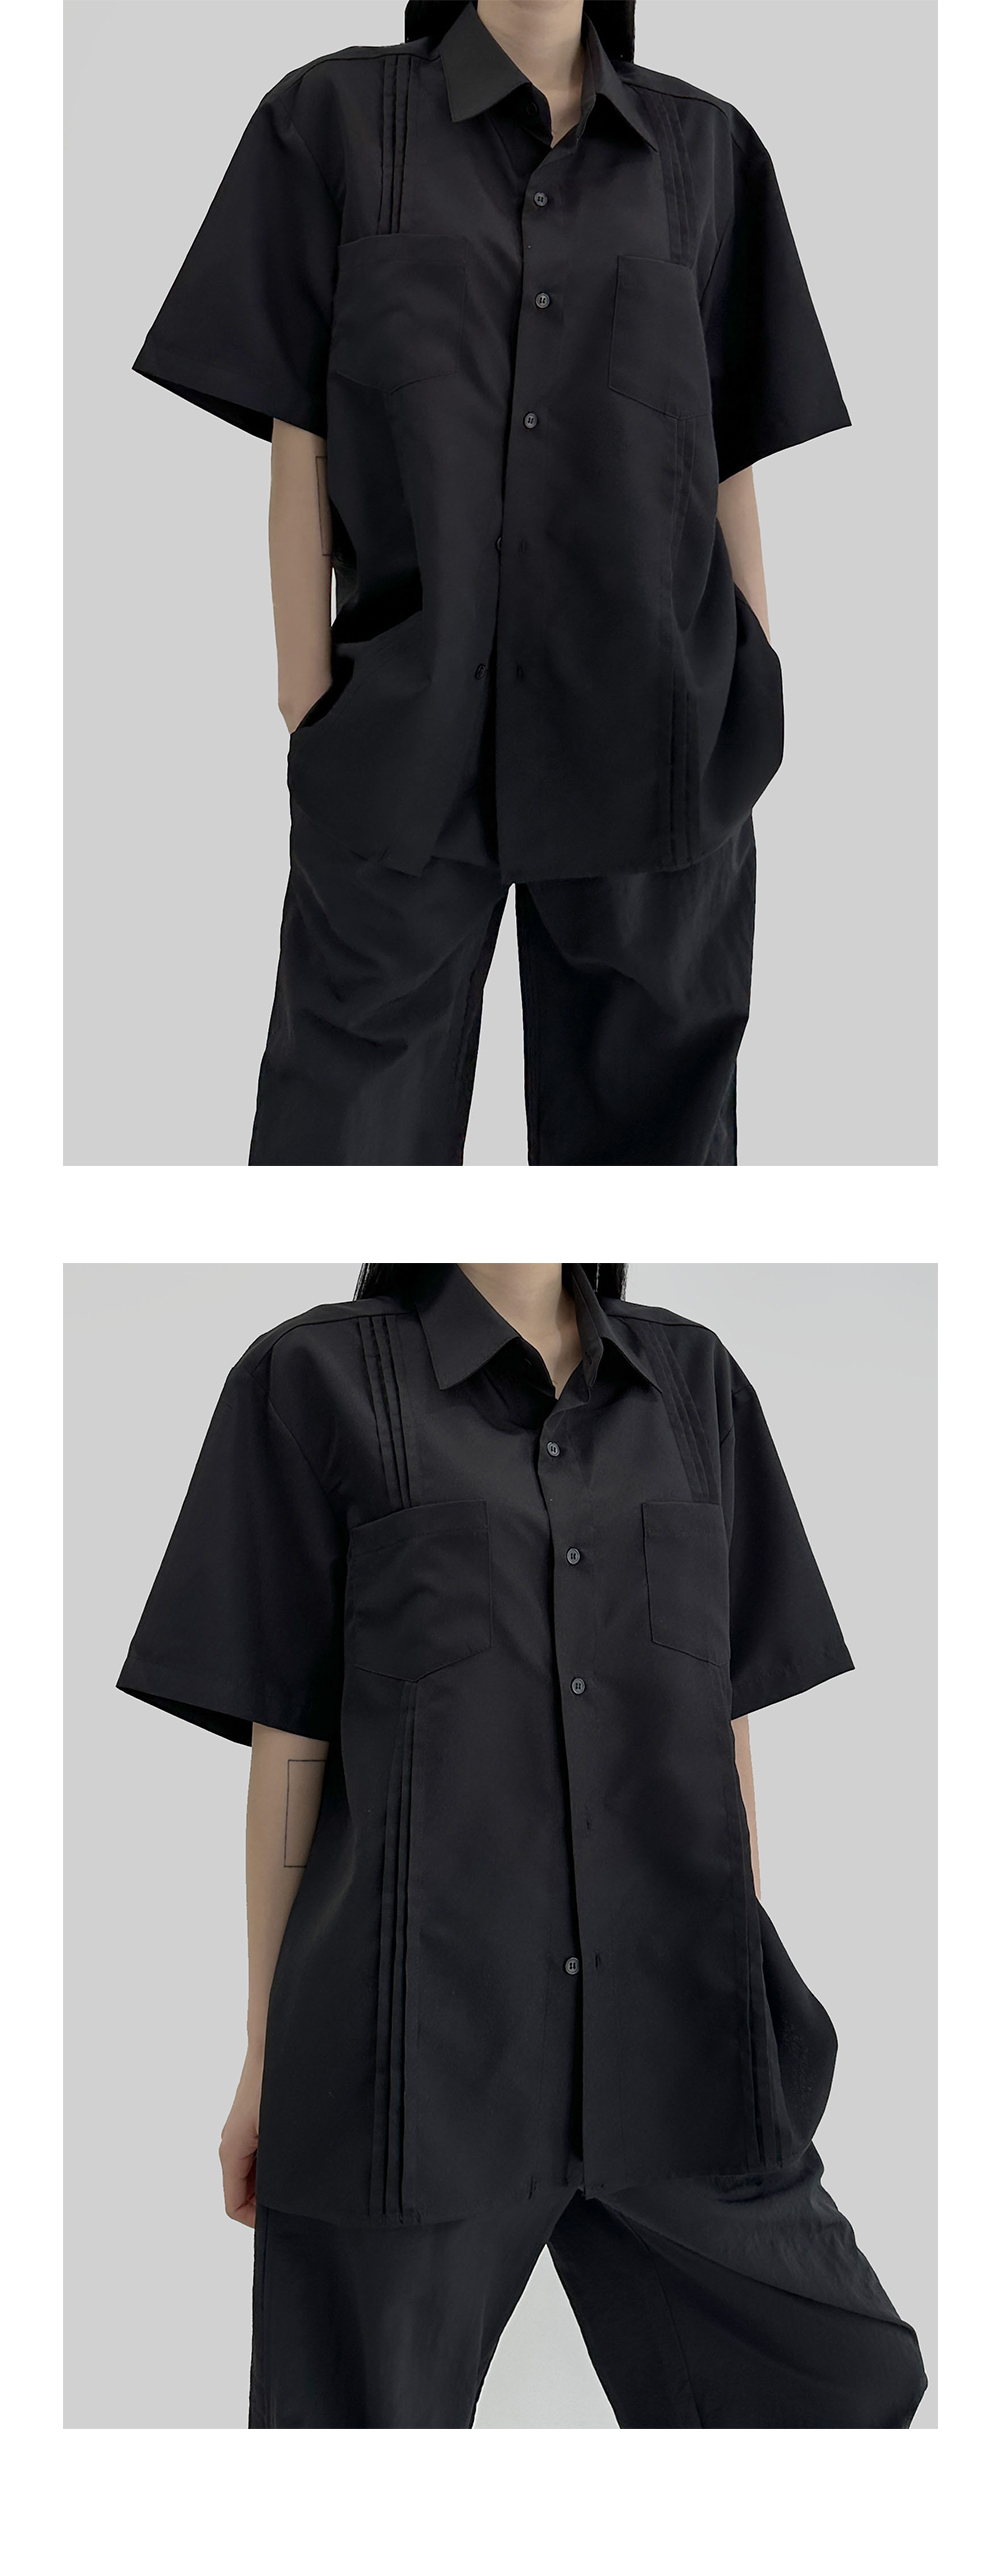 suspenders skirt/pants charcoal color image-S1L11